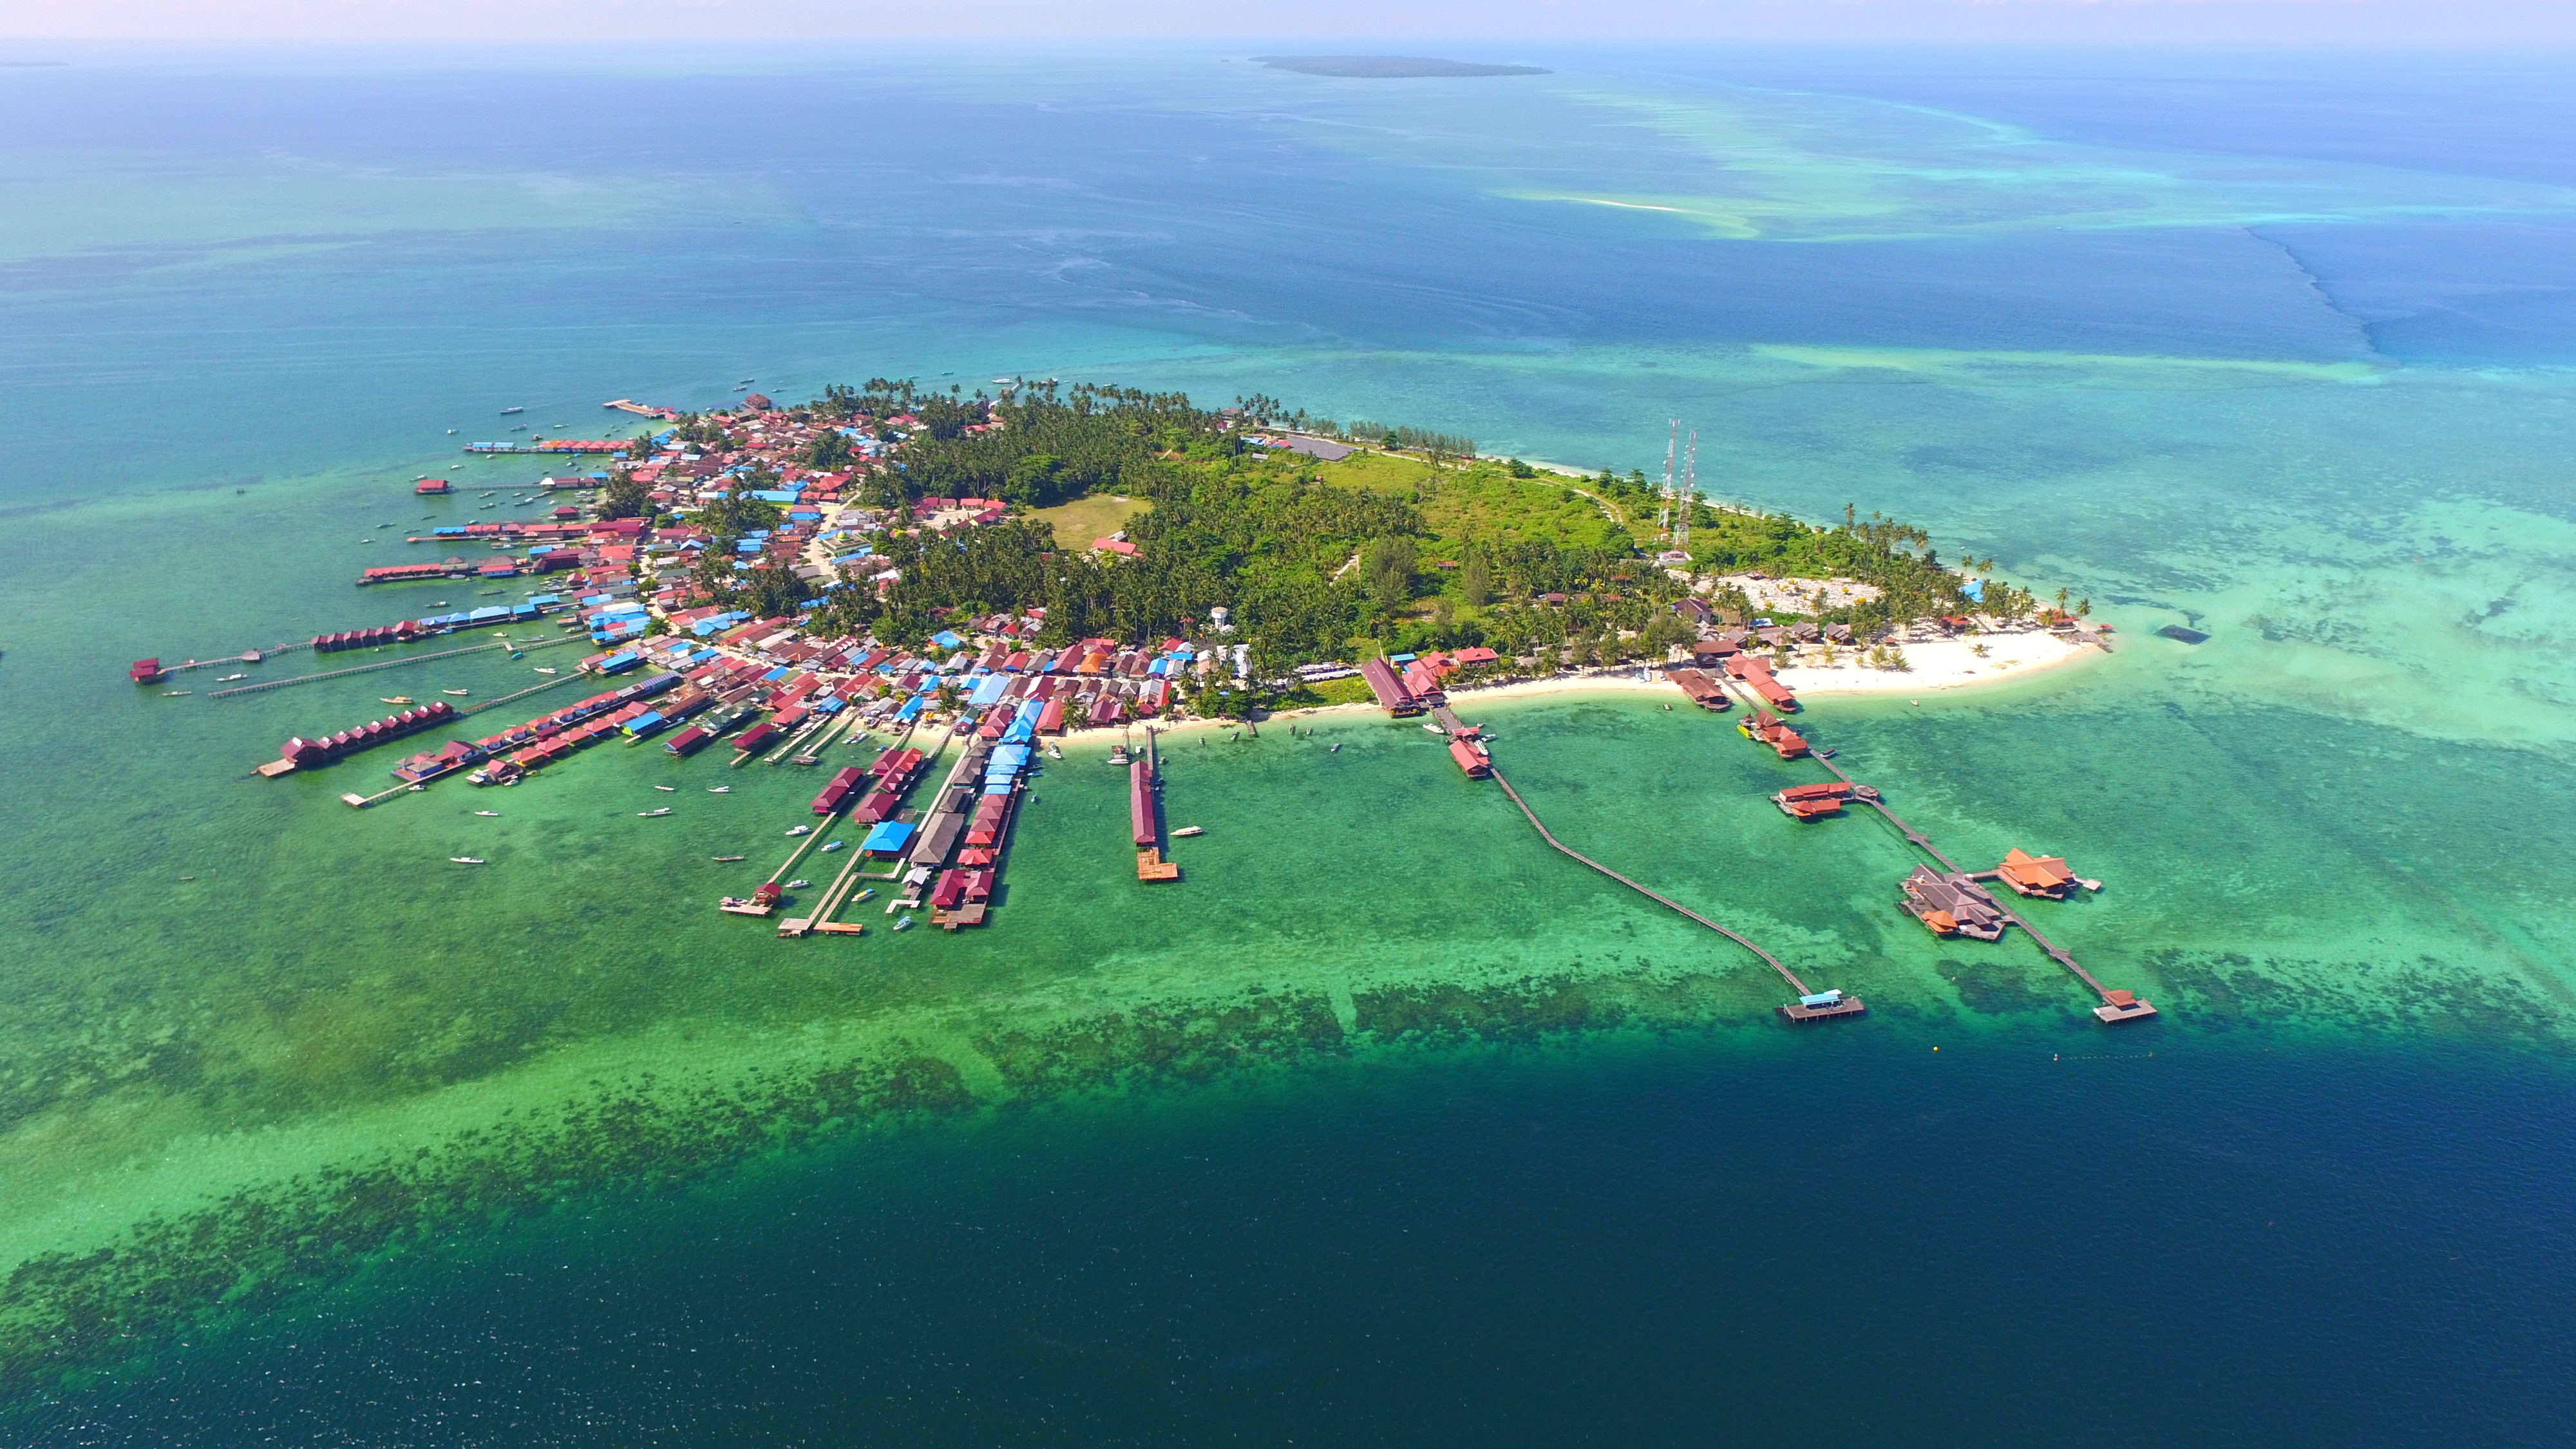 Panduan Lengkap Berwisata ke Pulau Derawan